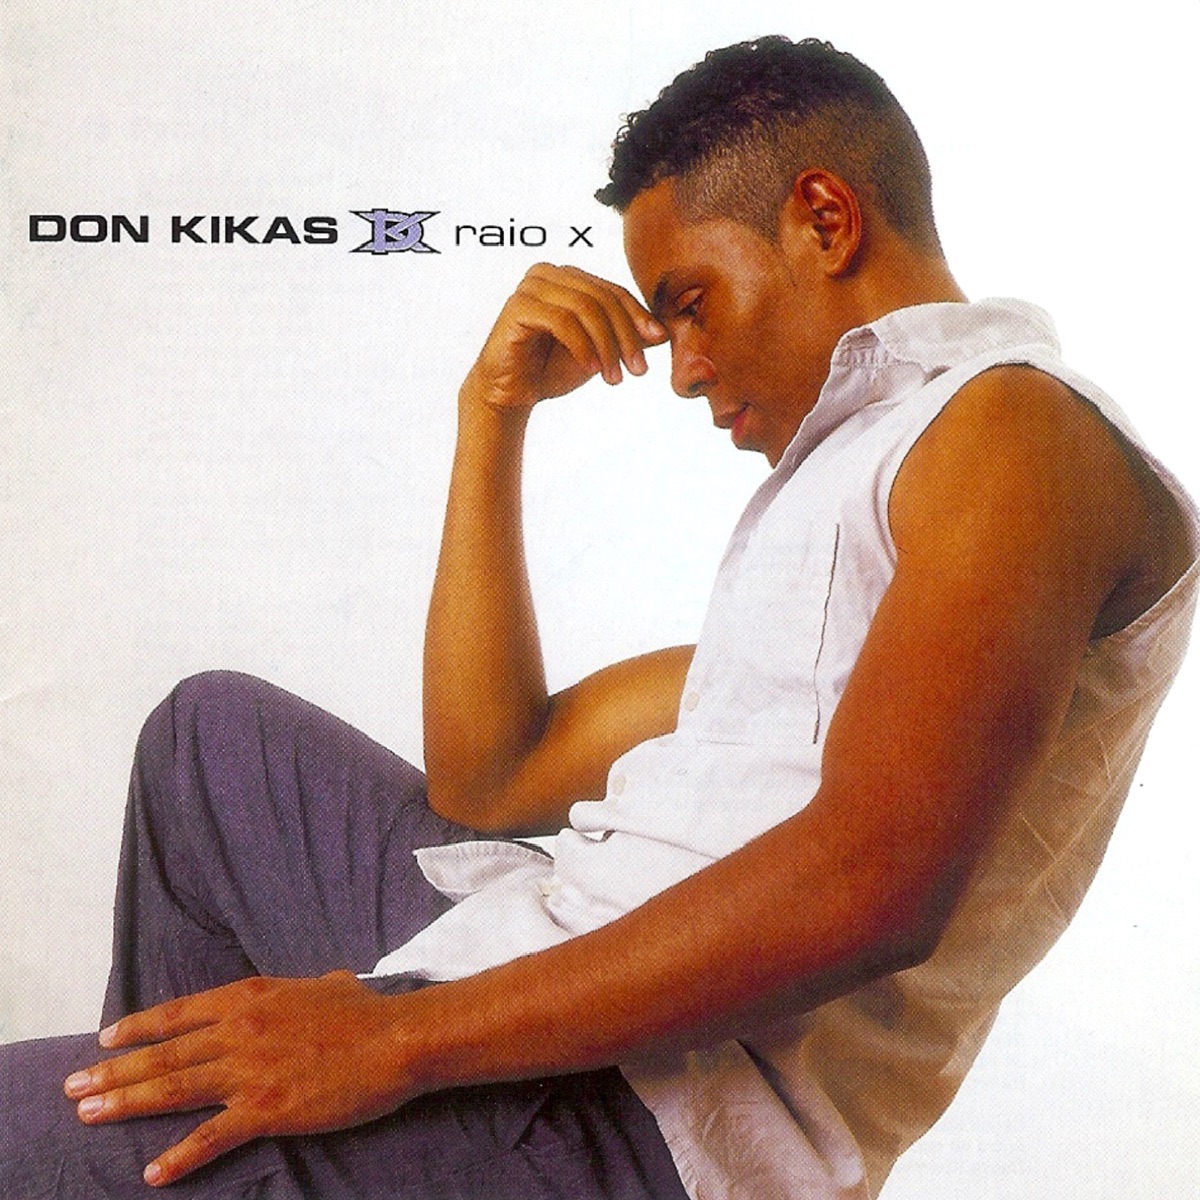 Xeque-Mate - Album by Don Kikas